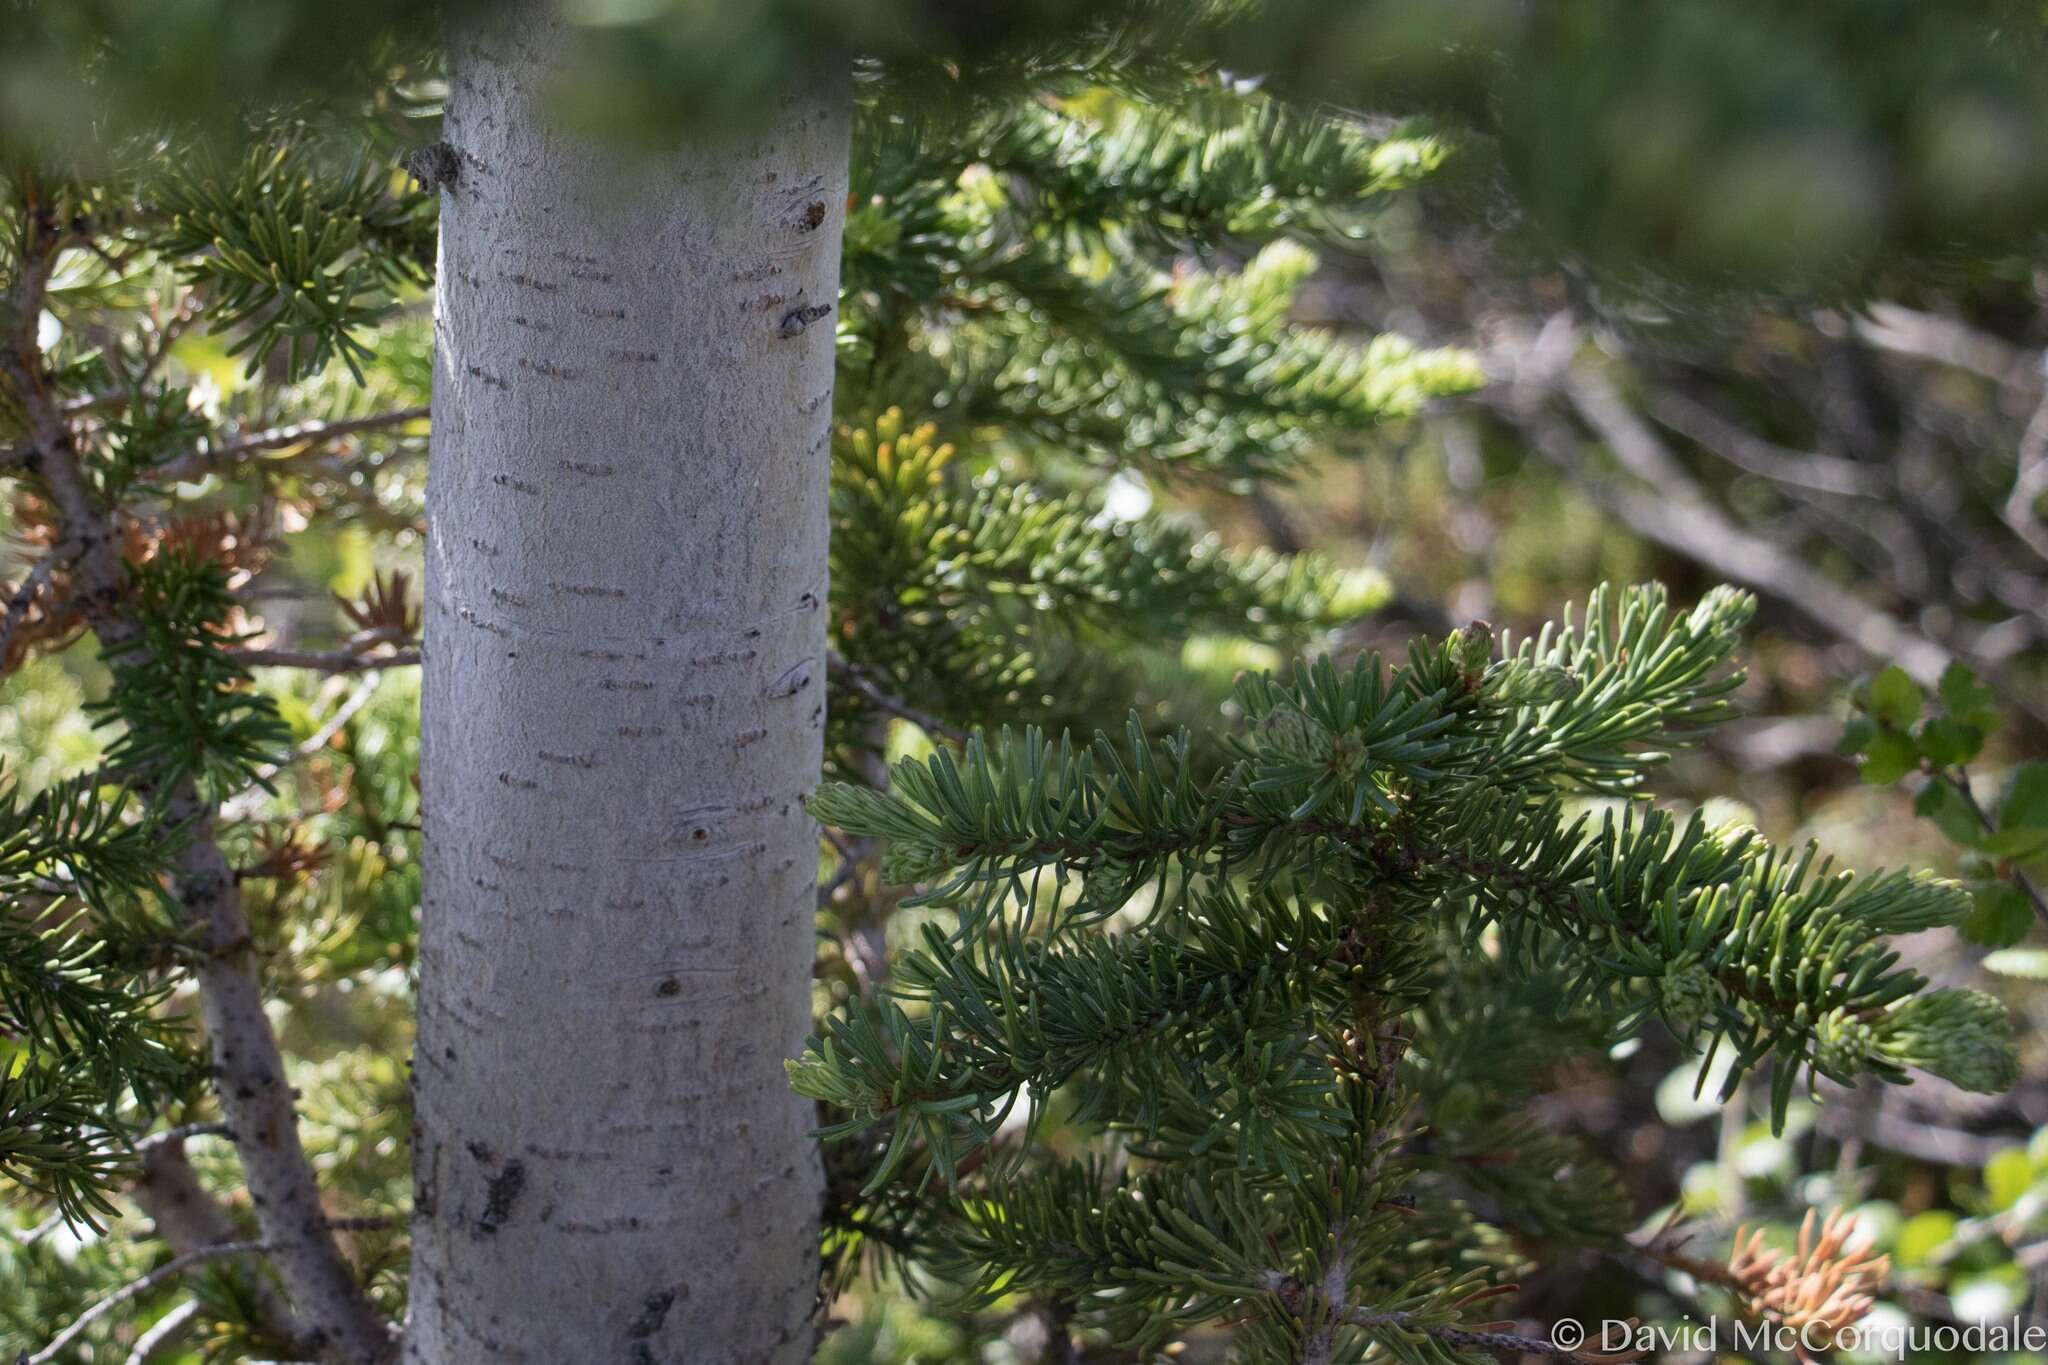 Image of subalpine fir